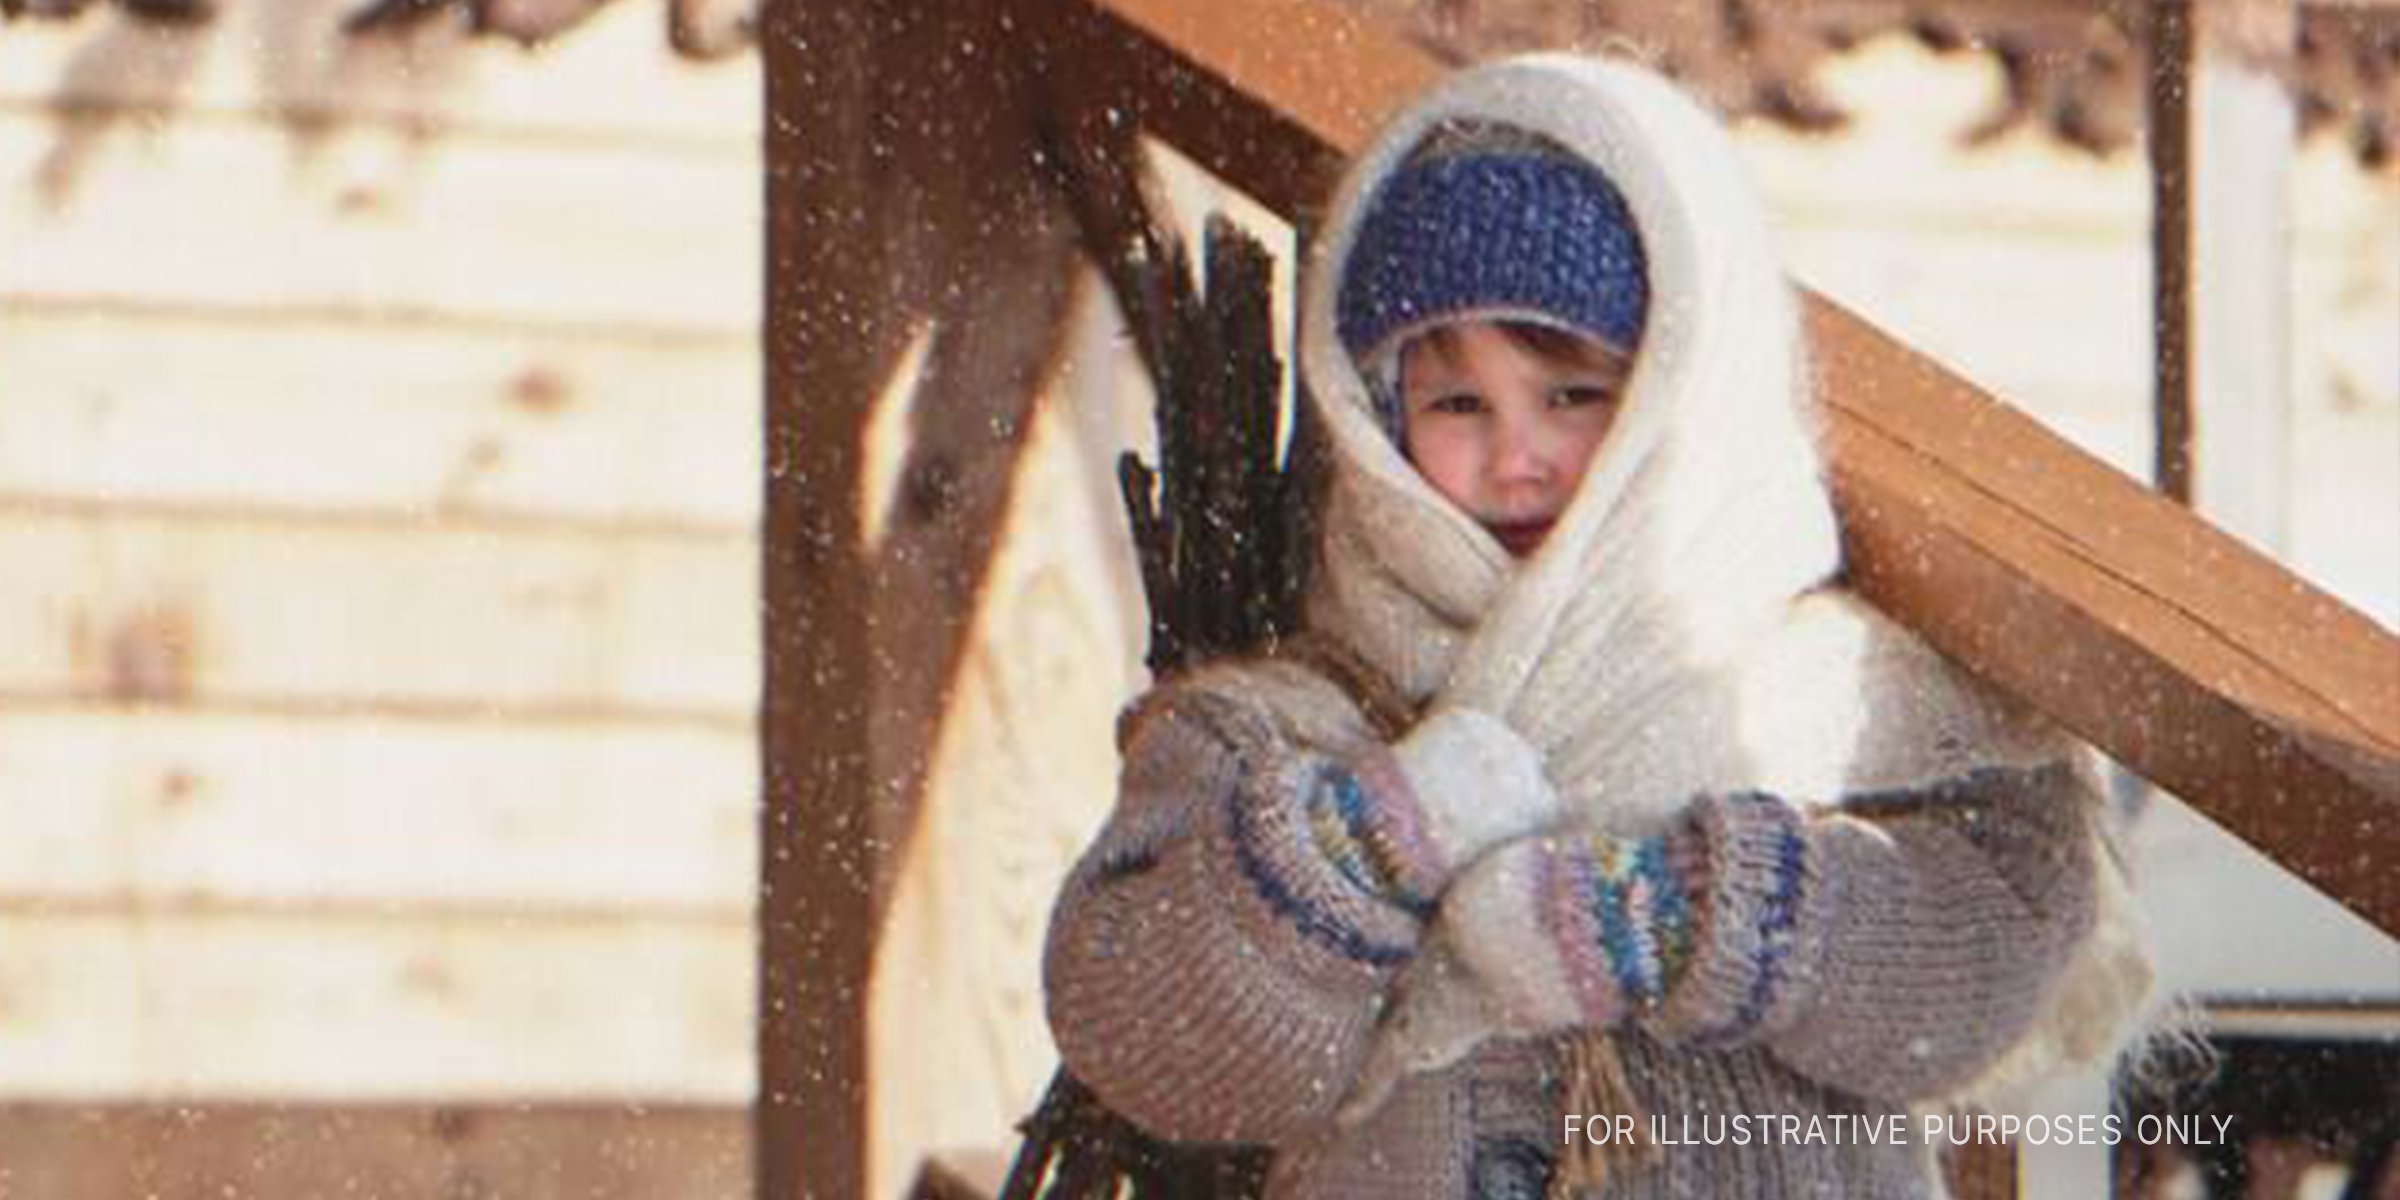 Little Girl In Snow. | Source: Shutterstock